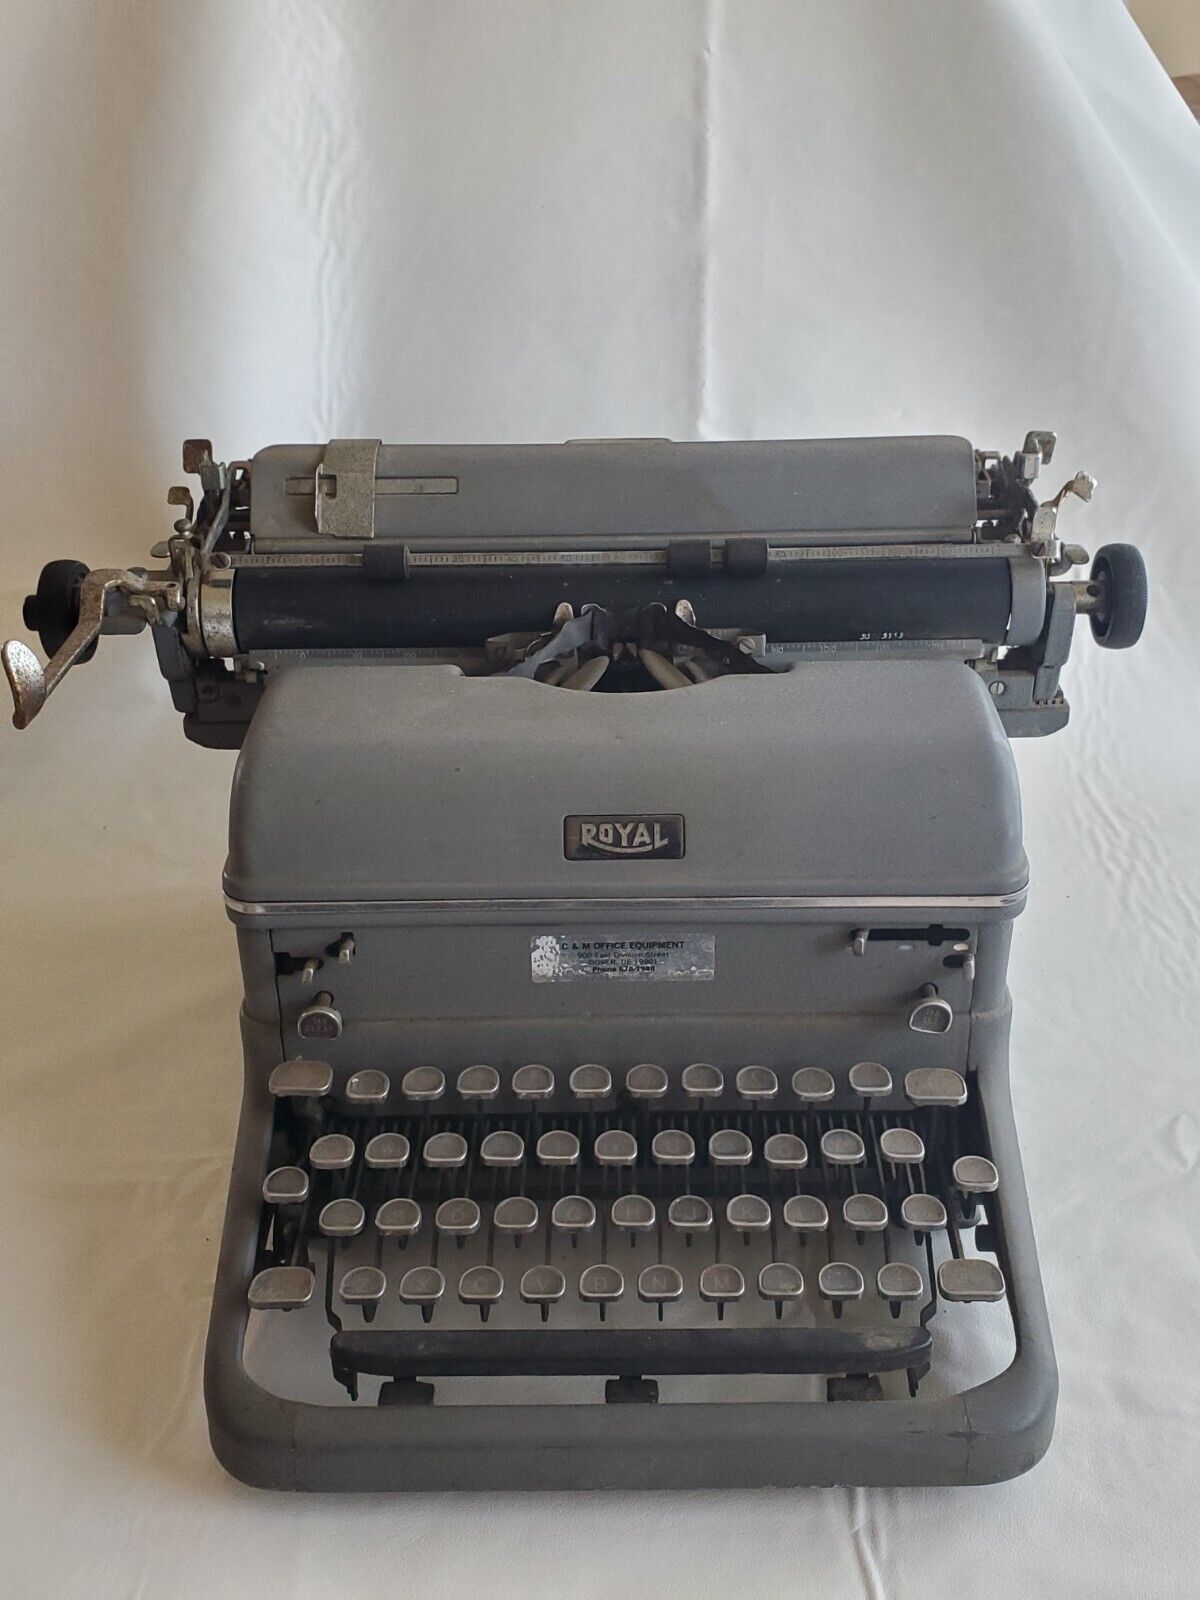 Royal Vintage Manual Typewriter for Parts or Restoration Untested